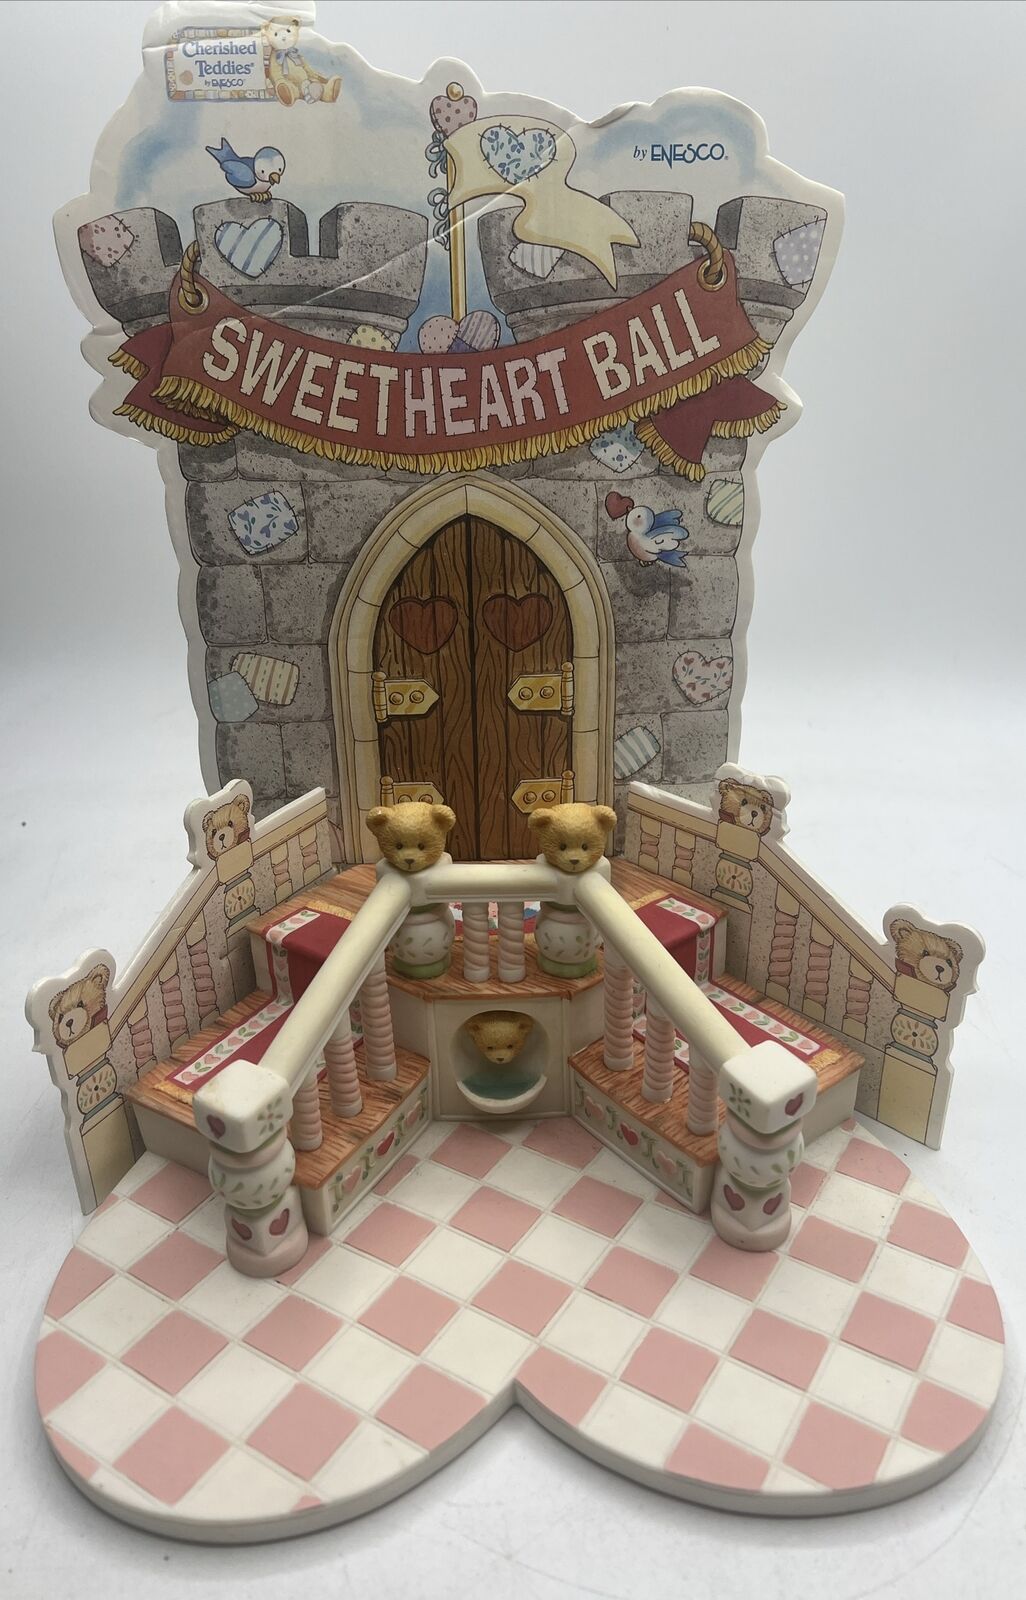 Enesco 1995 Cherished Teddies Sweet Heart Ball Display Stand CRT096